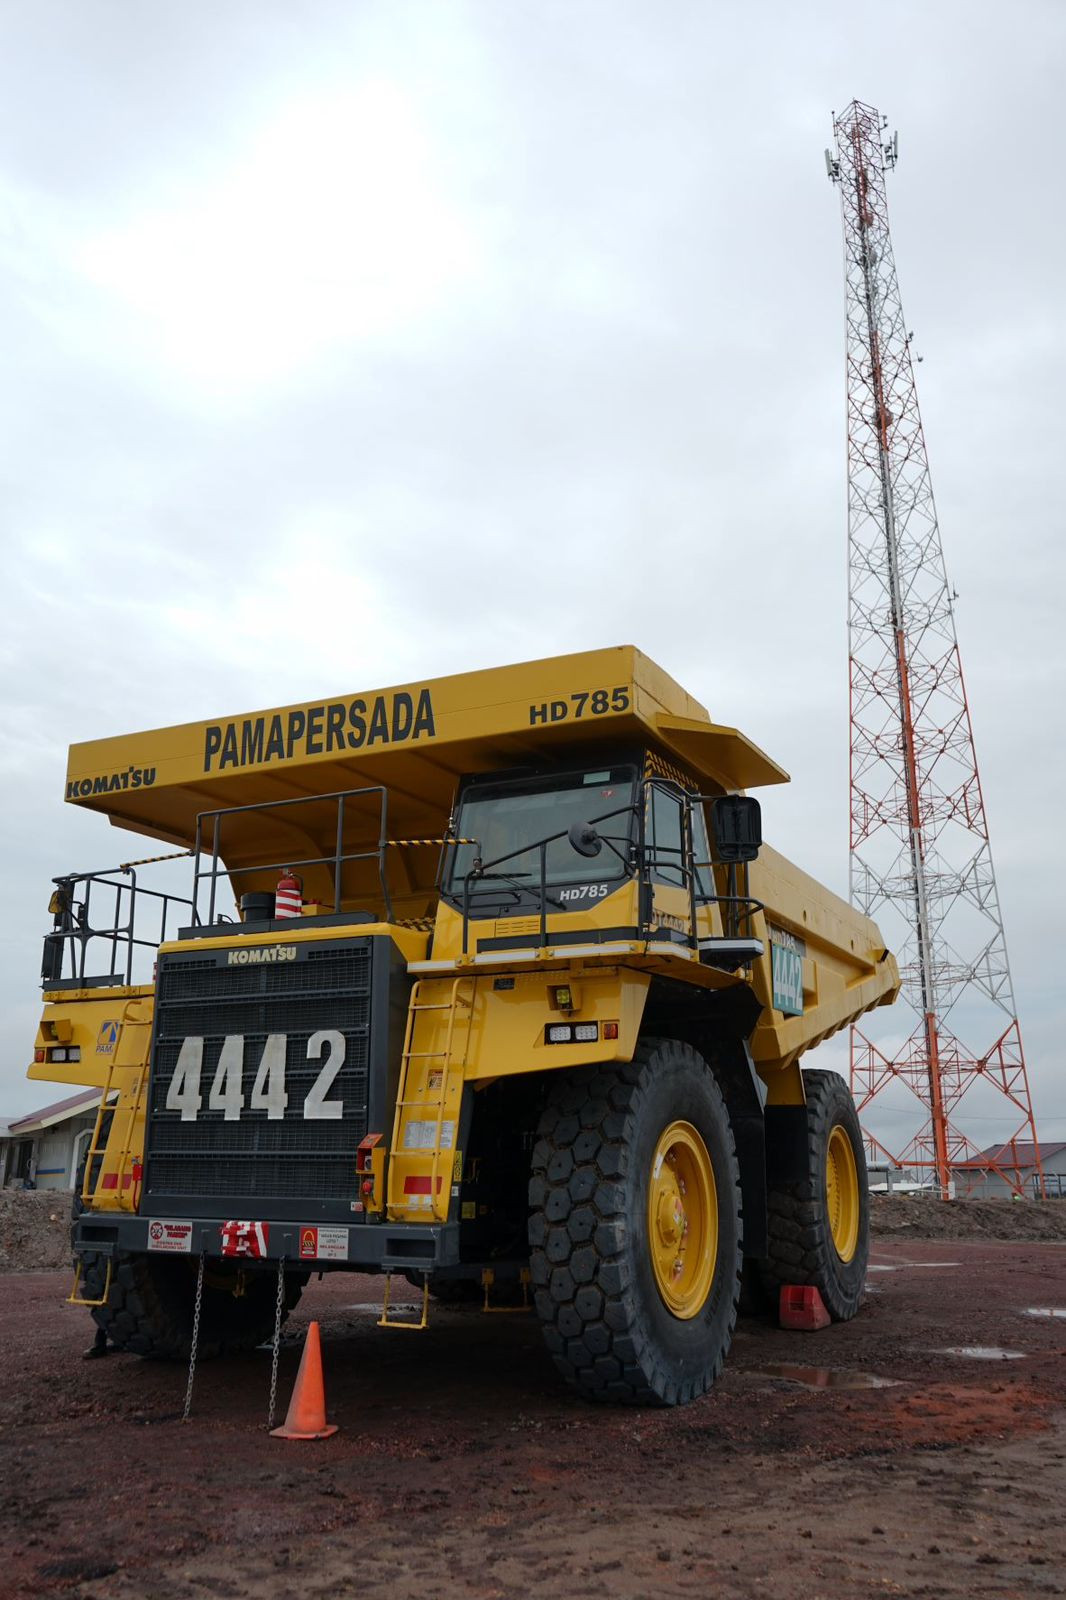 XL Axiata hadirkan solusi Green Mining dengan private network di Industri pertambangan